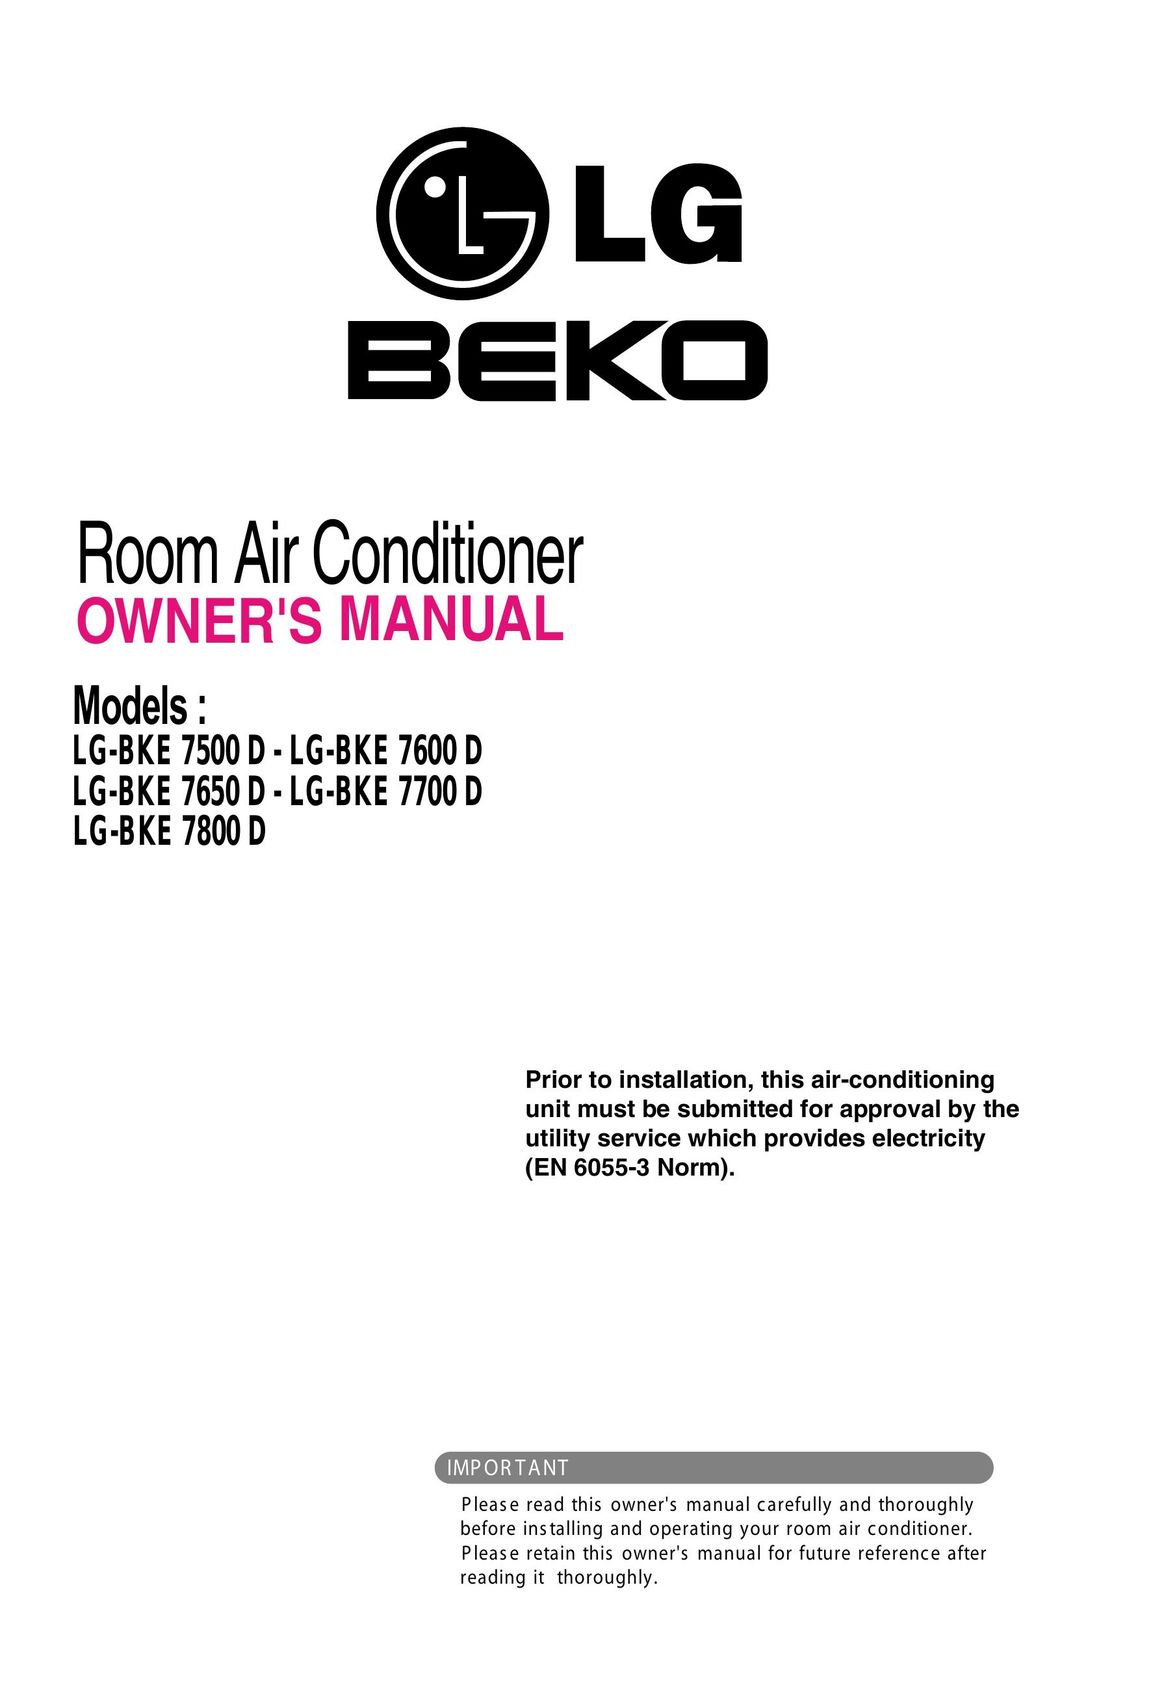 Beko LG-BKE7650 D, LG-BKE7700 D Air Conditioner User Manual